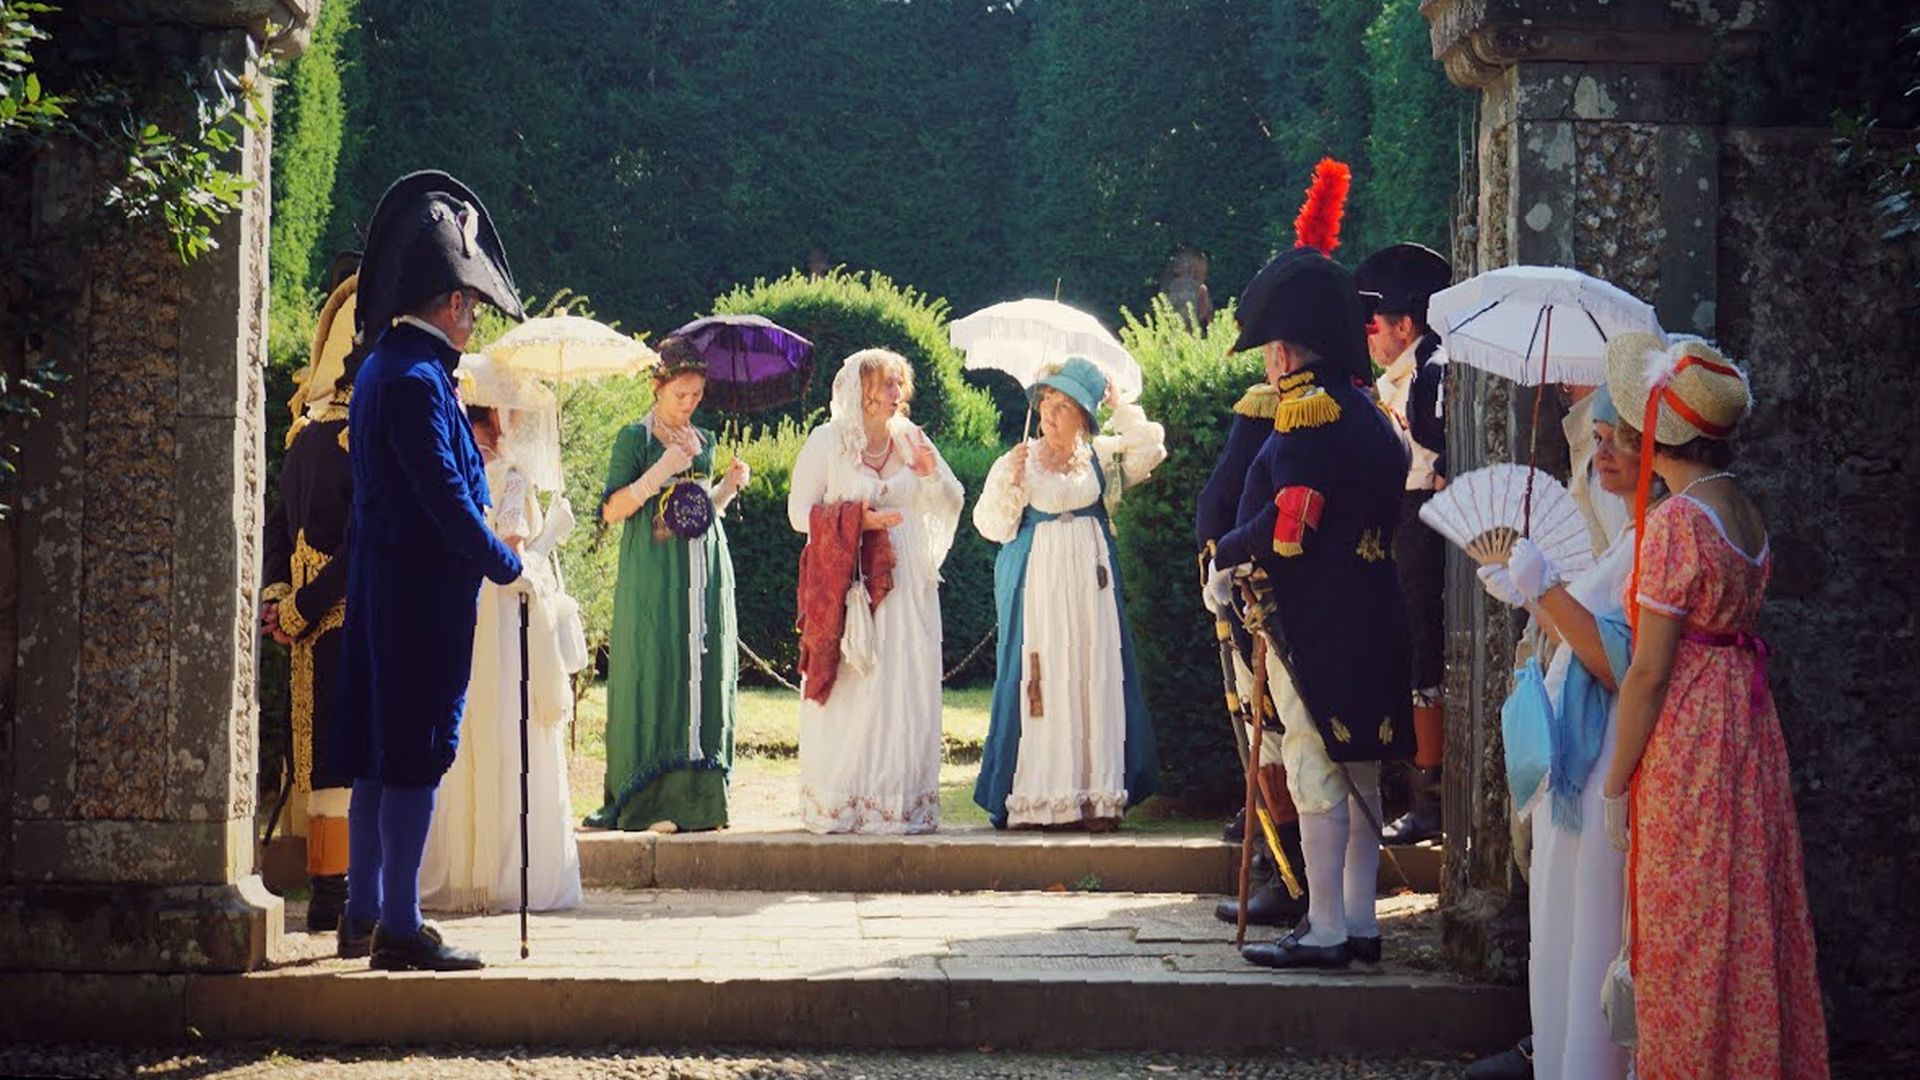 Napoleonic re-enactment at Villa Reale in Marlia